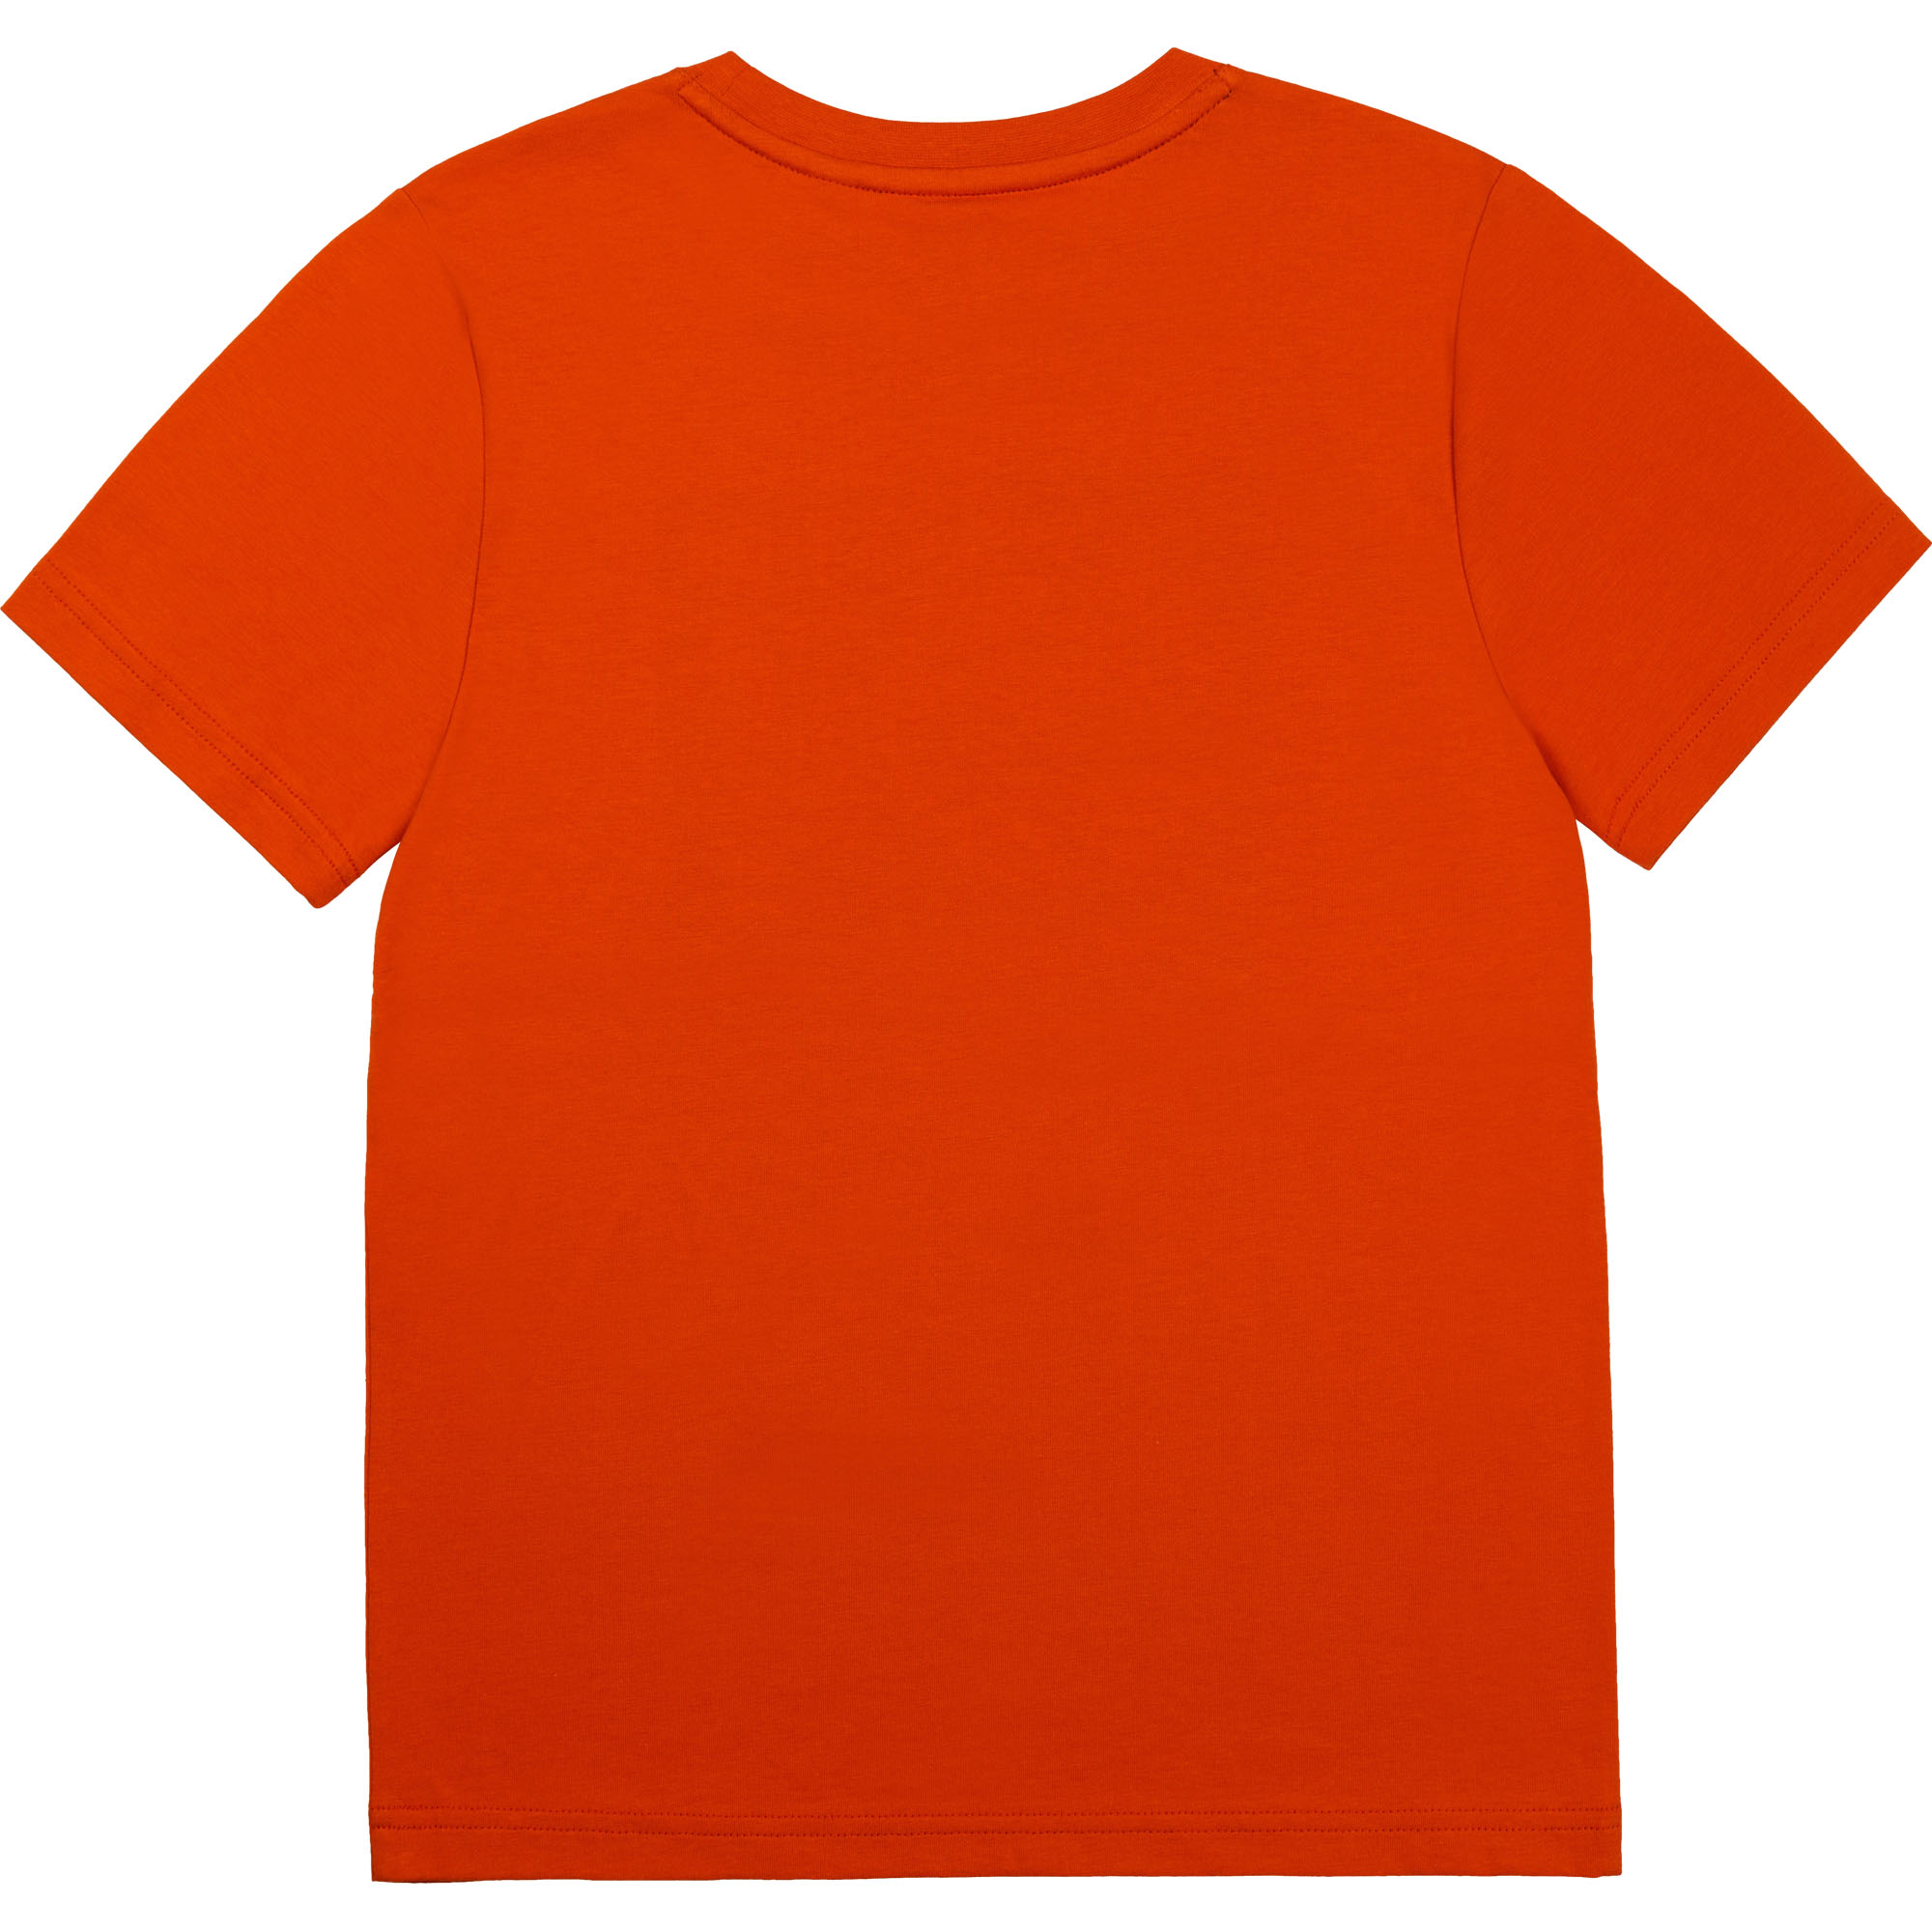 Cotton jersey t-shirt TIMBERLAND for BOY